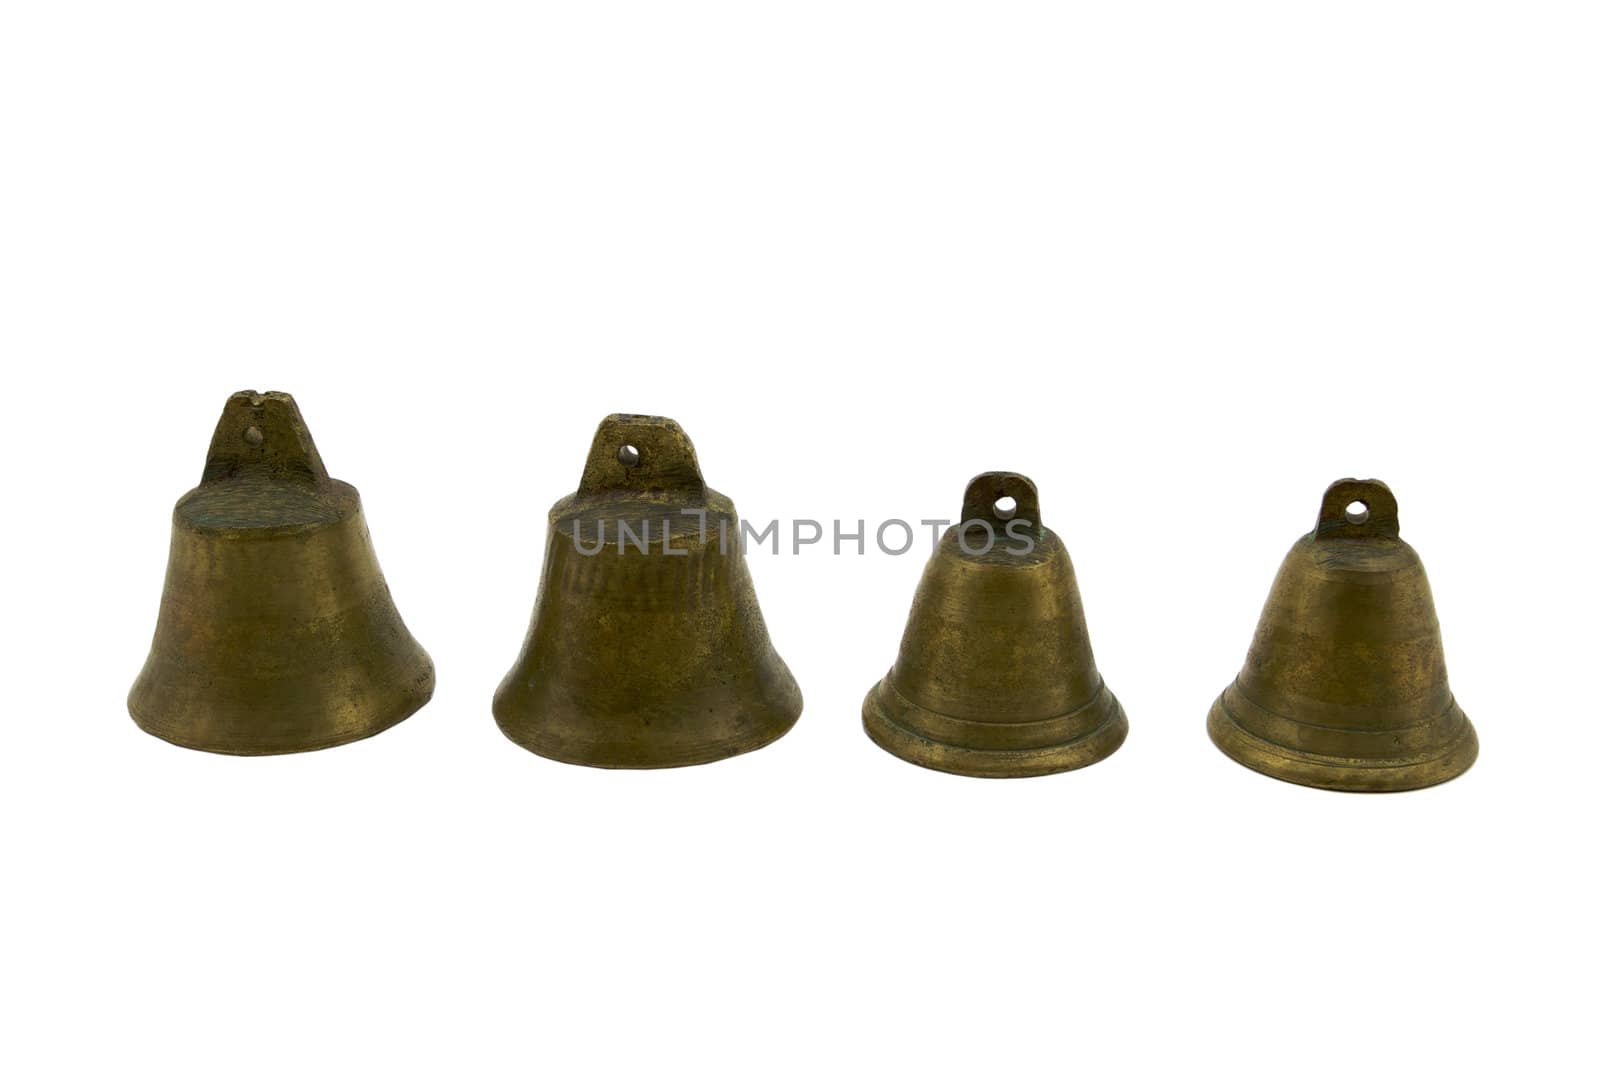 fourf brass bells by bobkeenan